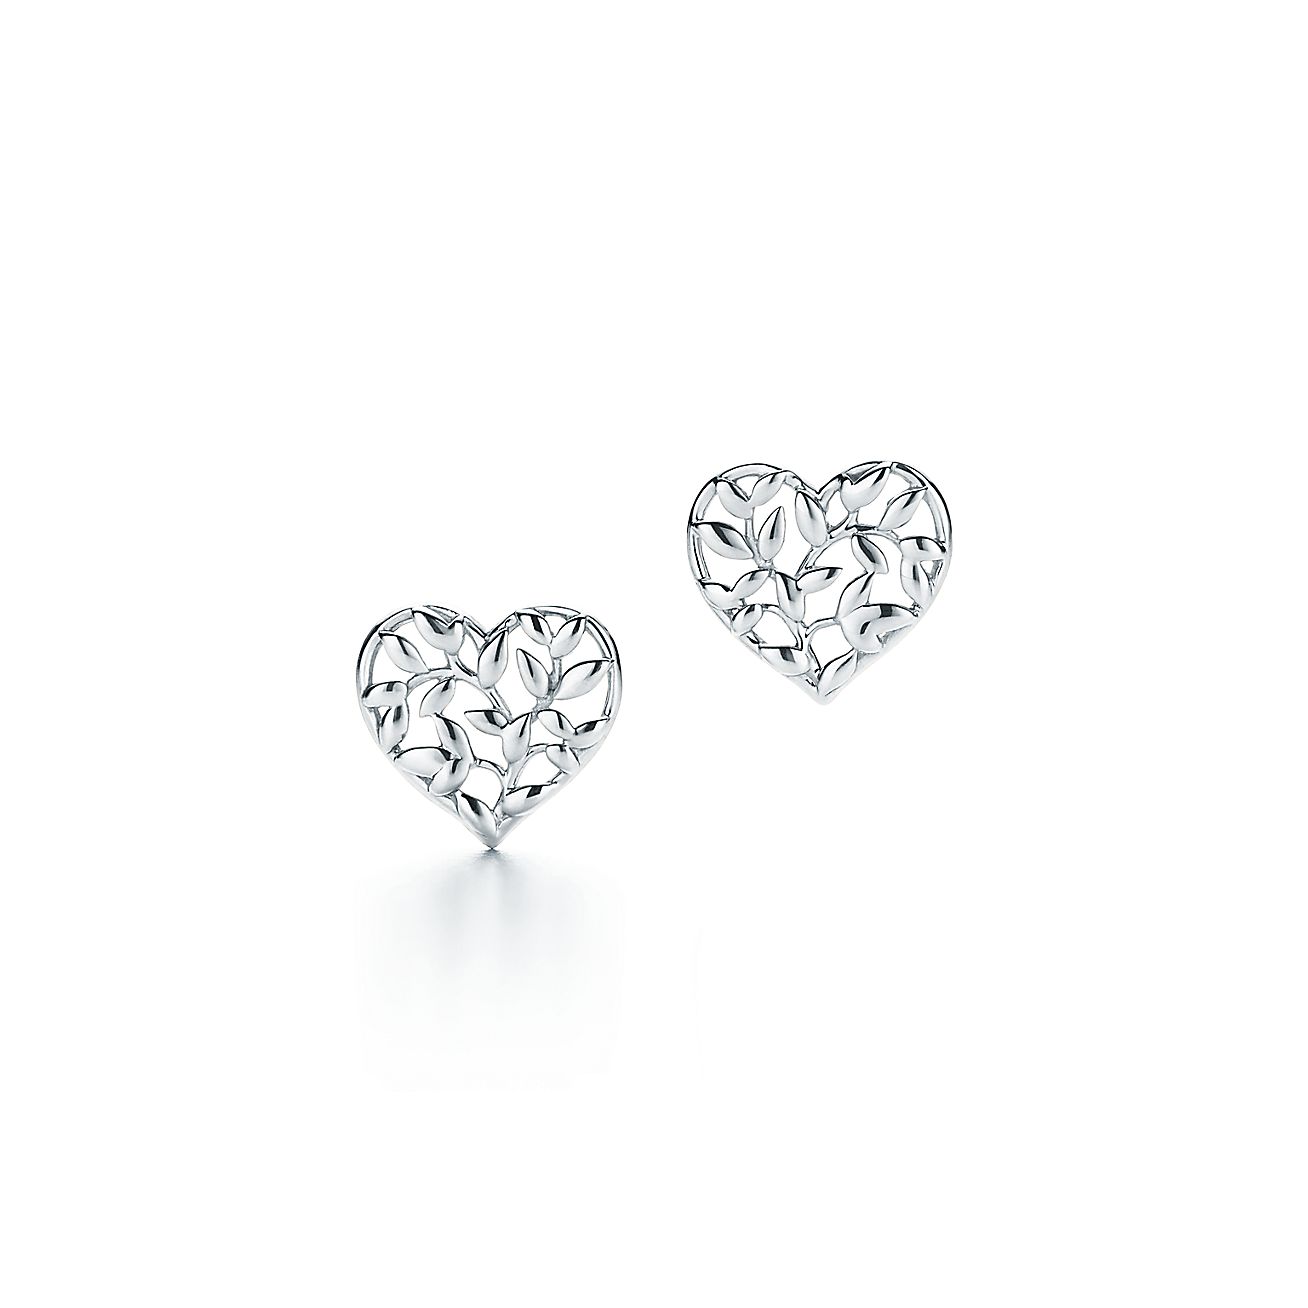 Anahata Earrings boundless heart - Lulu Designs Jewelry